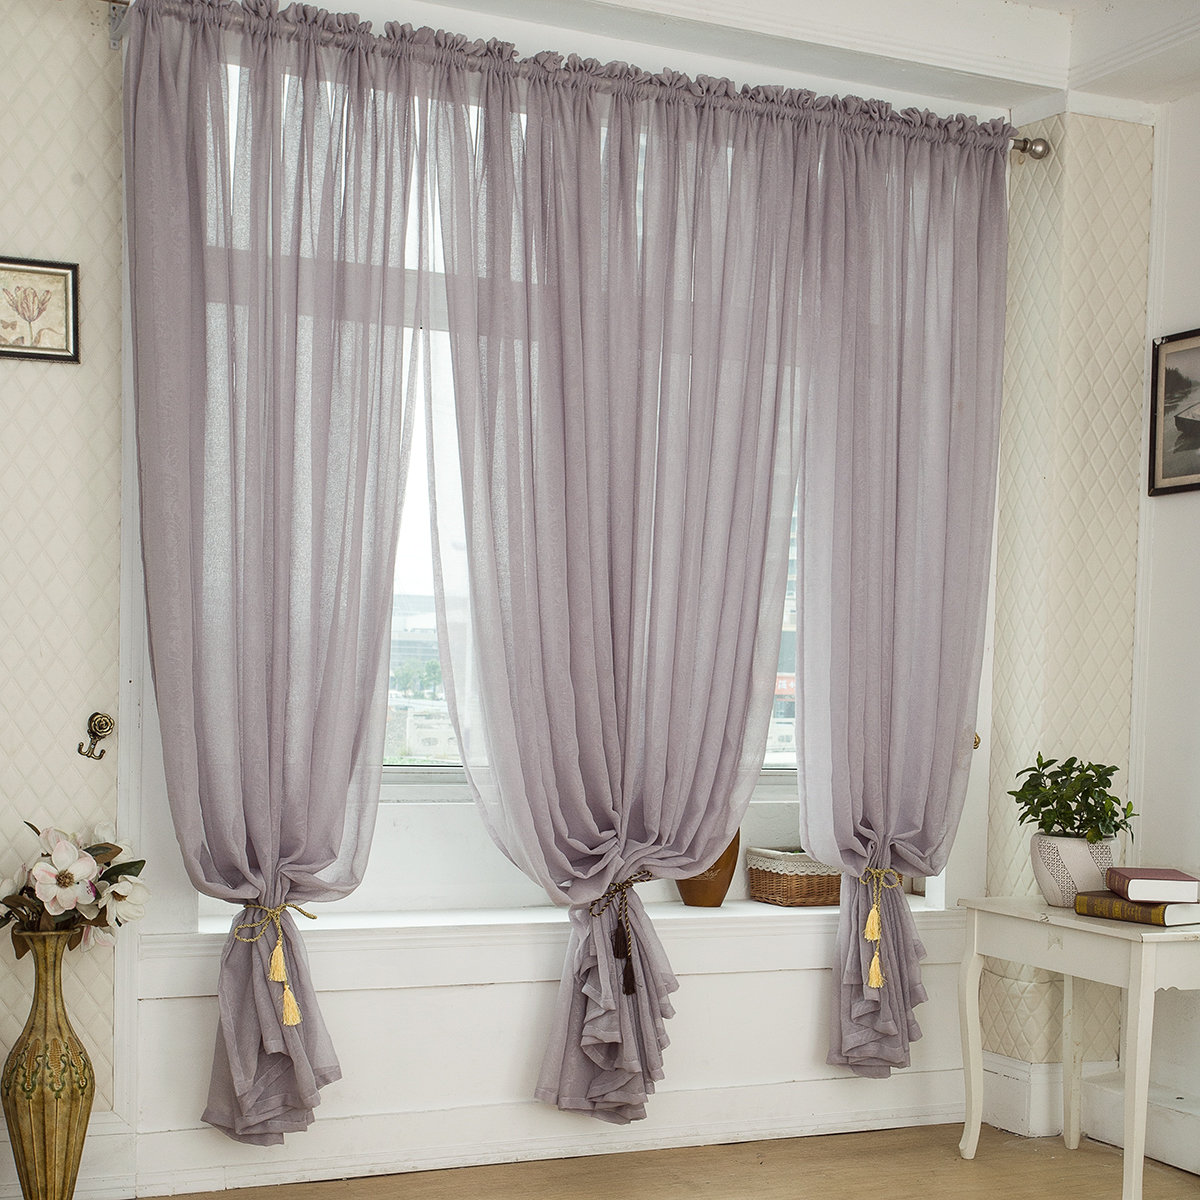 Curtains drawstring design